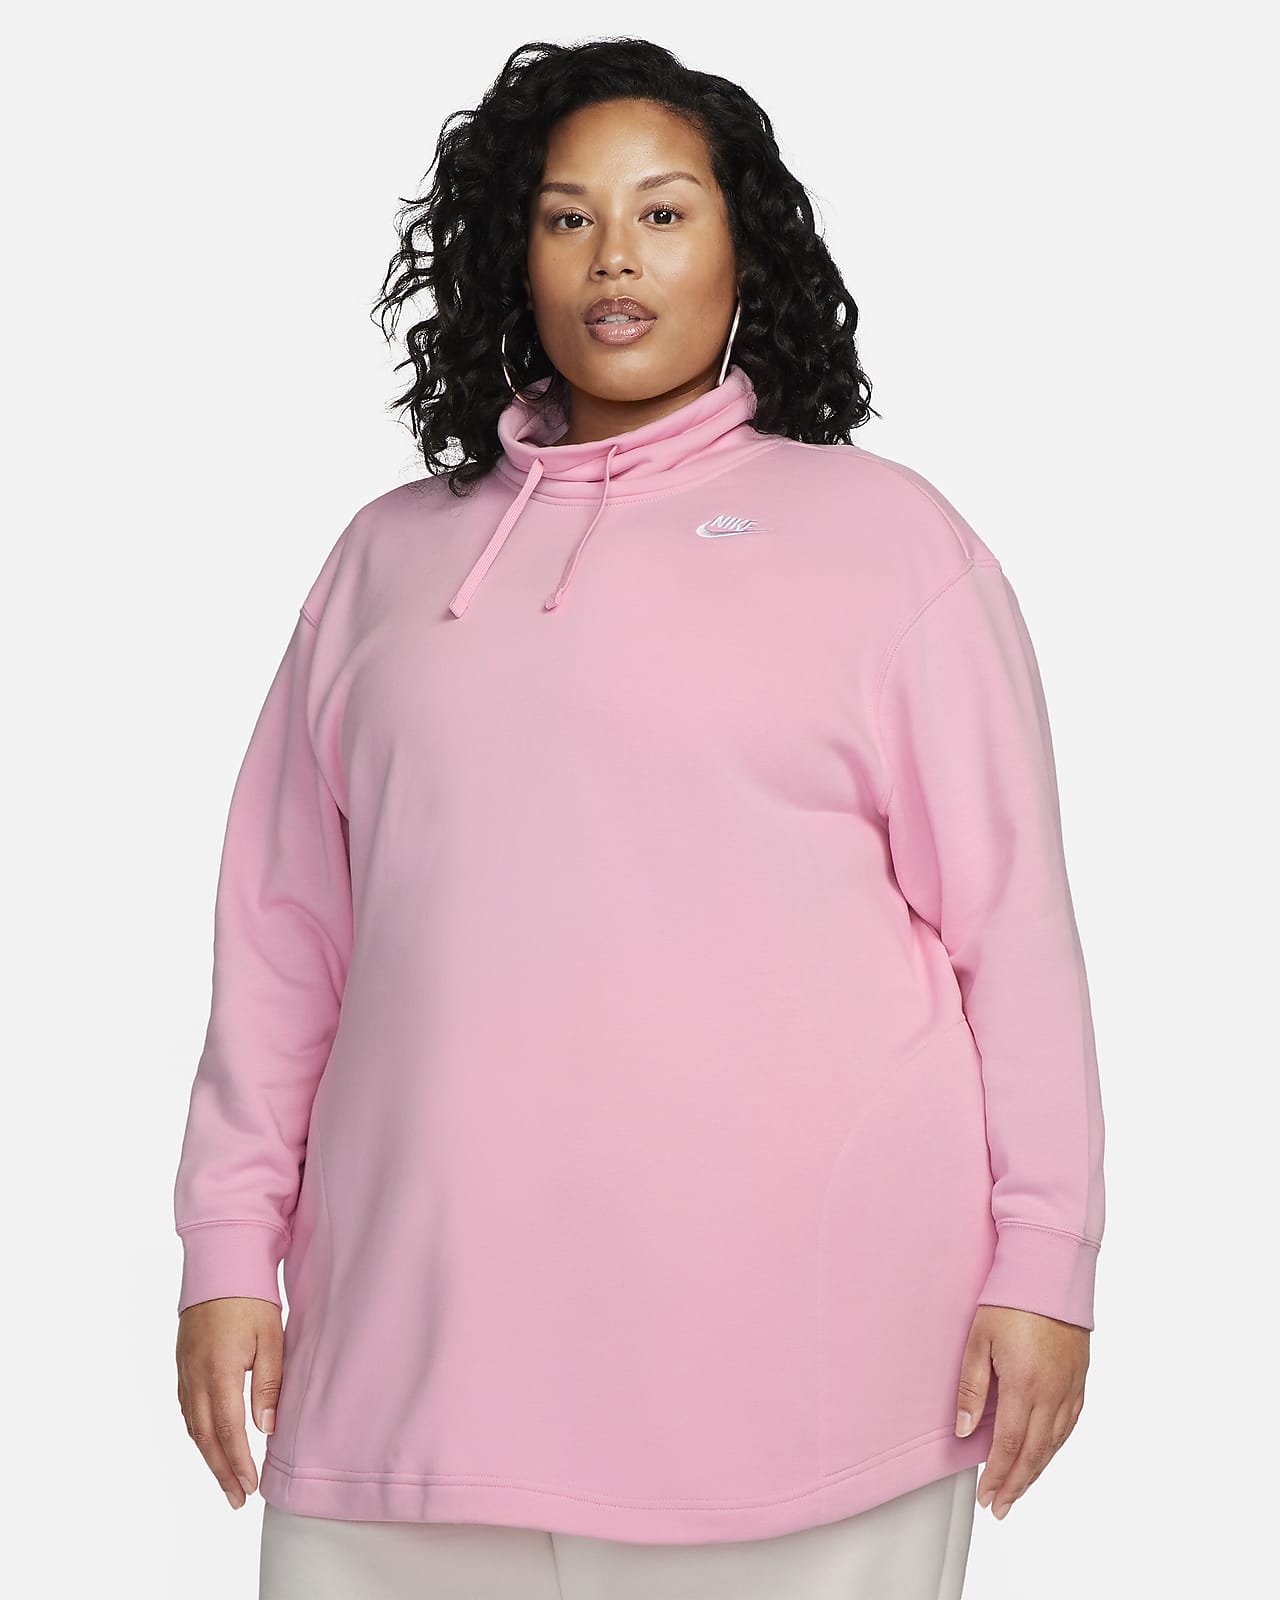 Women's Size XL Hoodies & Sweatshirts, Women's Sweatshirts & Fashion  Hoodies